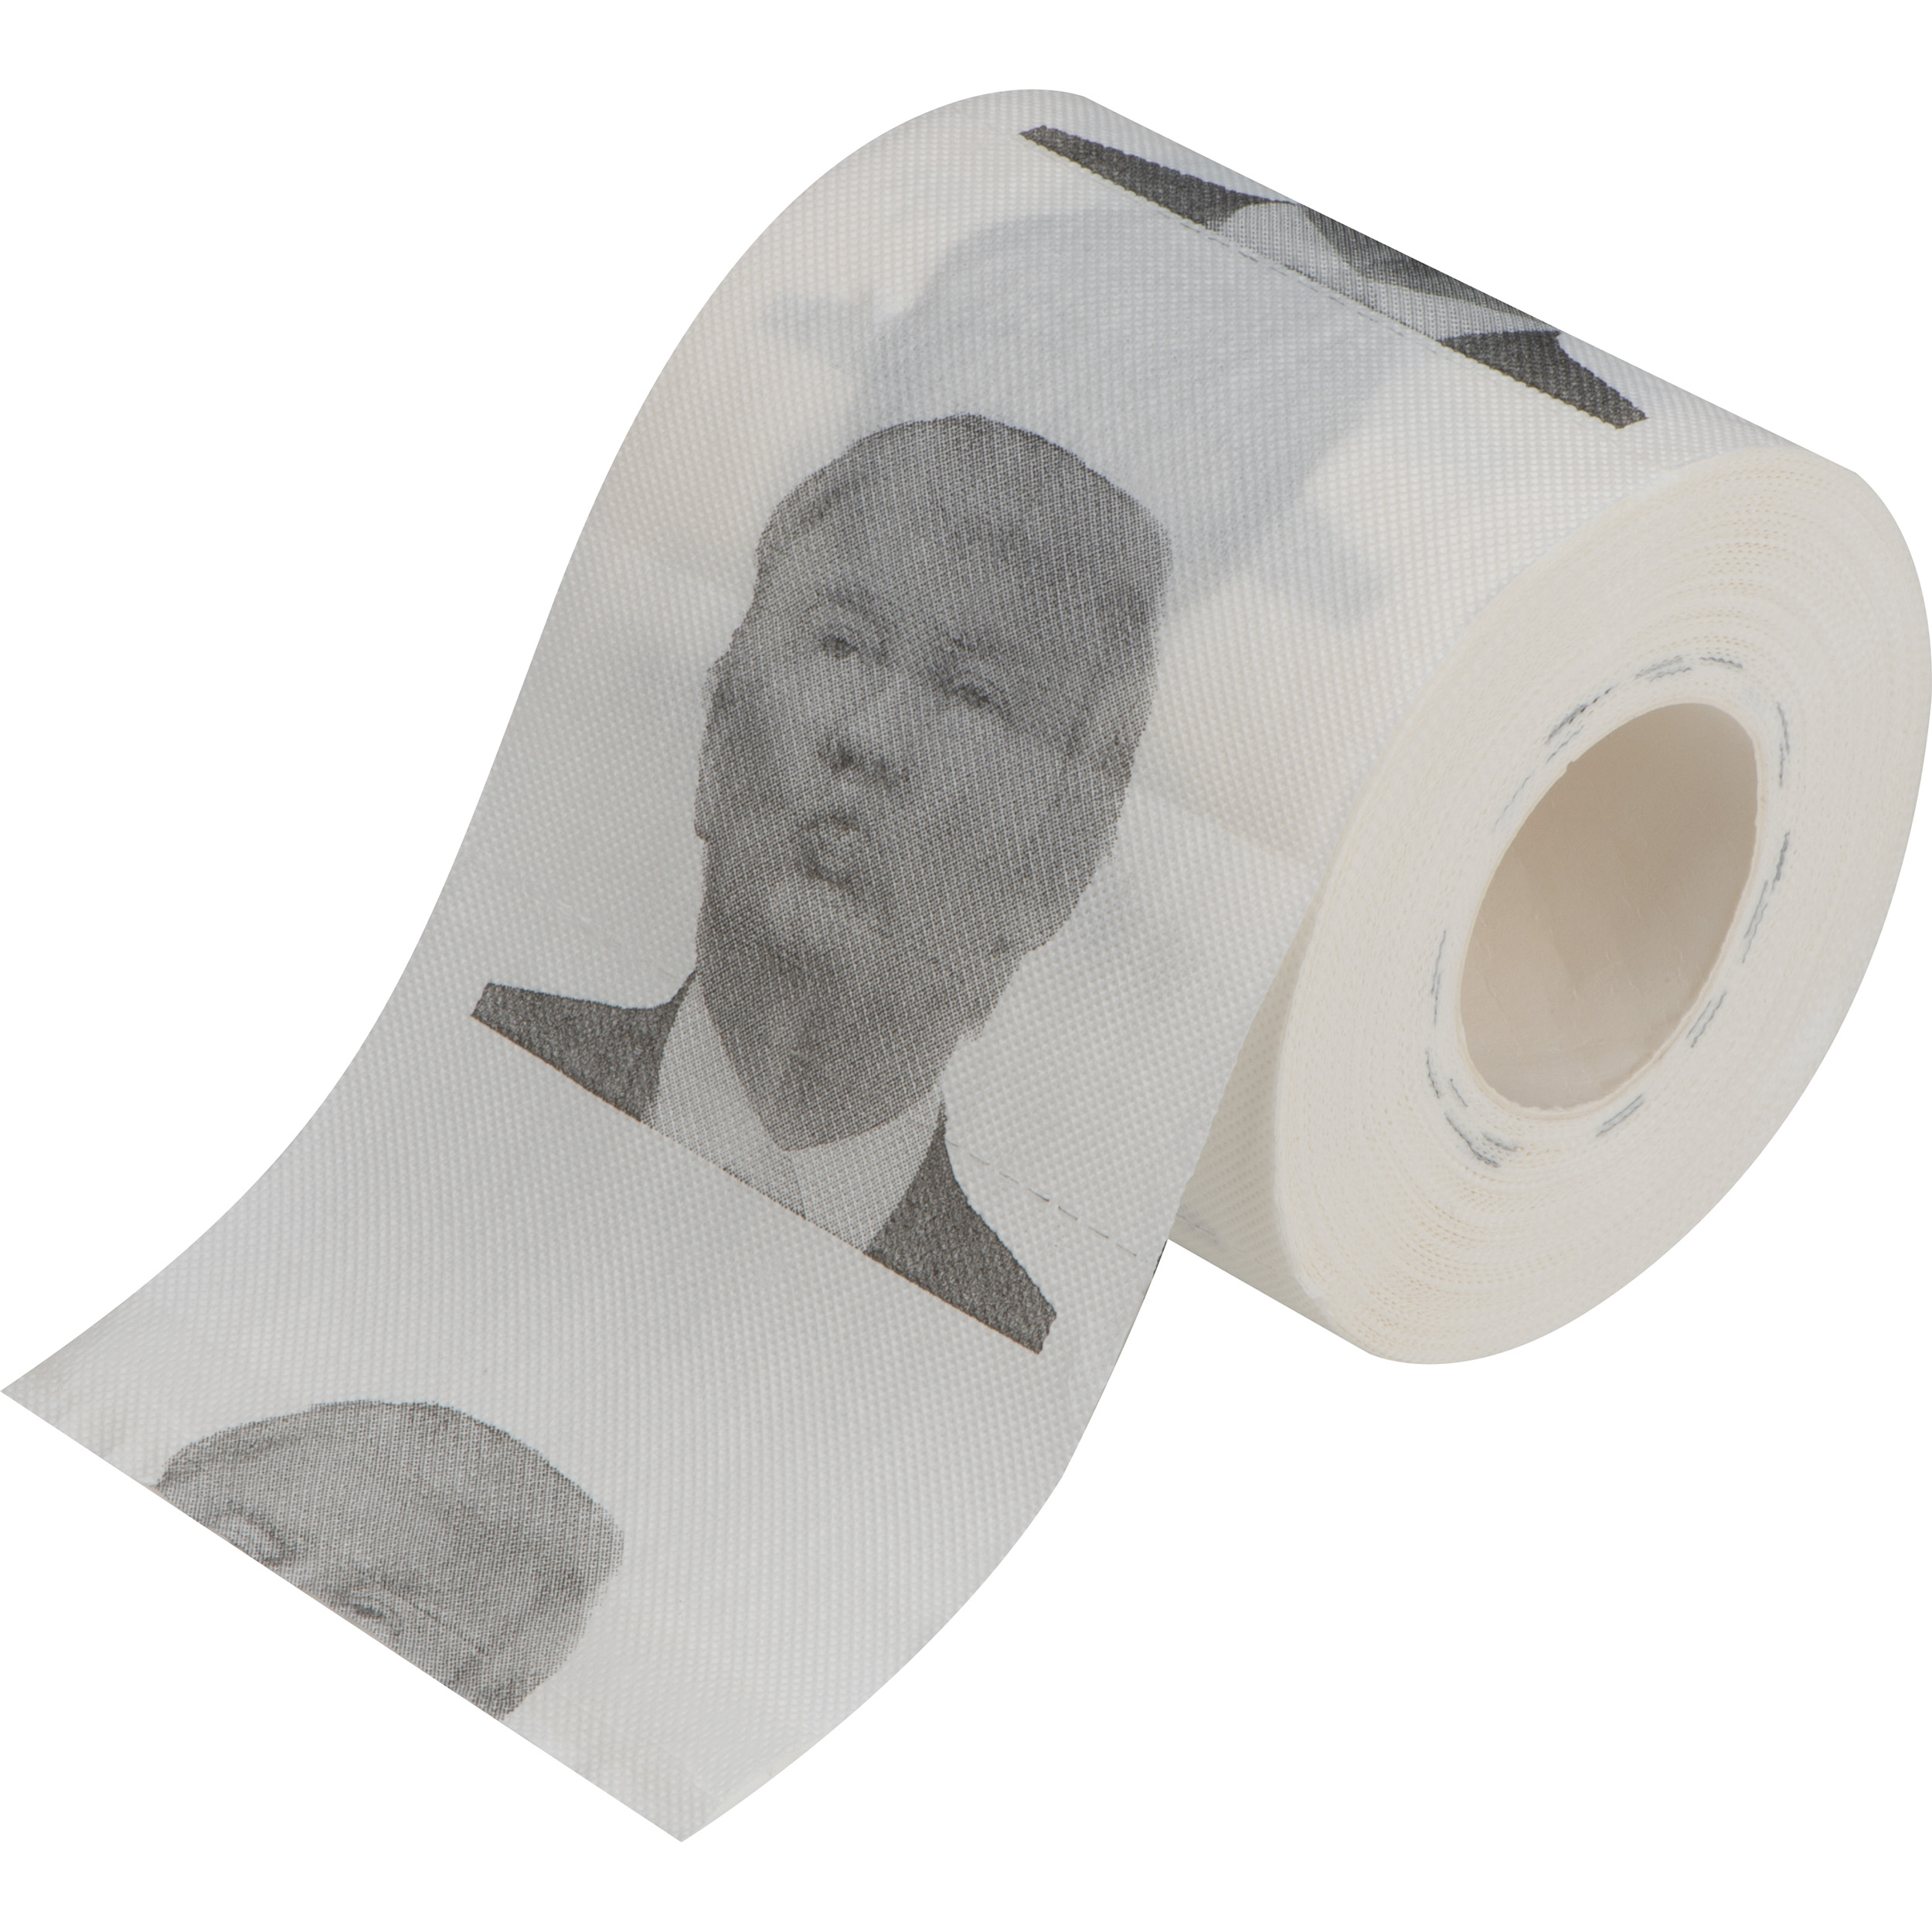 Toiletpaper "Donald"